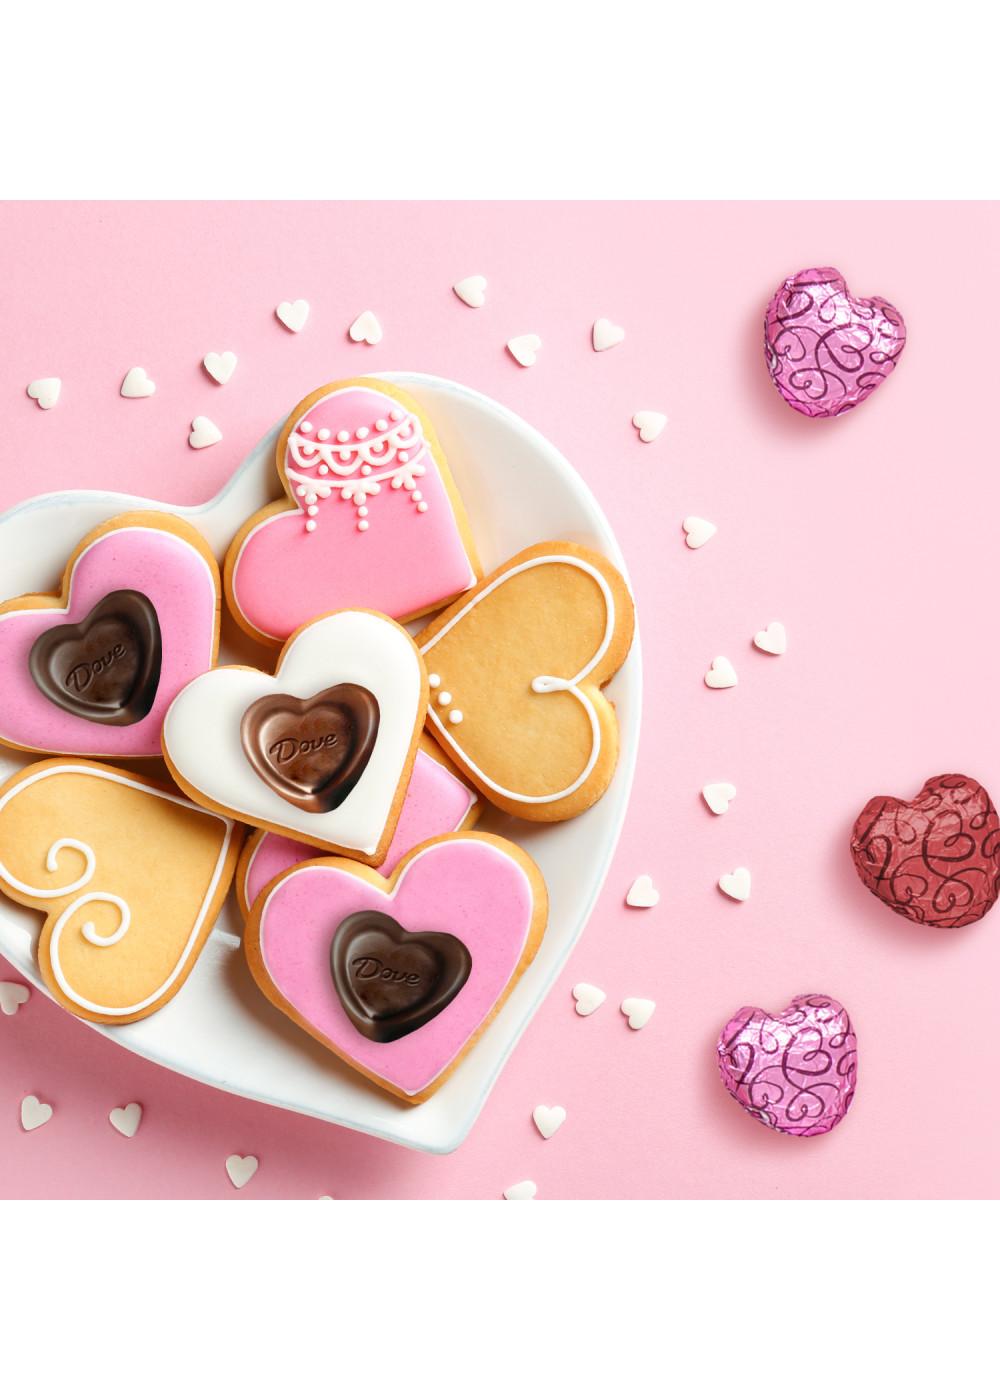 Dove Promises Hearts Milk & Dark Chocolate Valentine's Candy; image 5 of 7